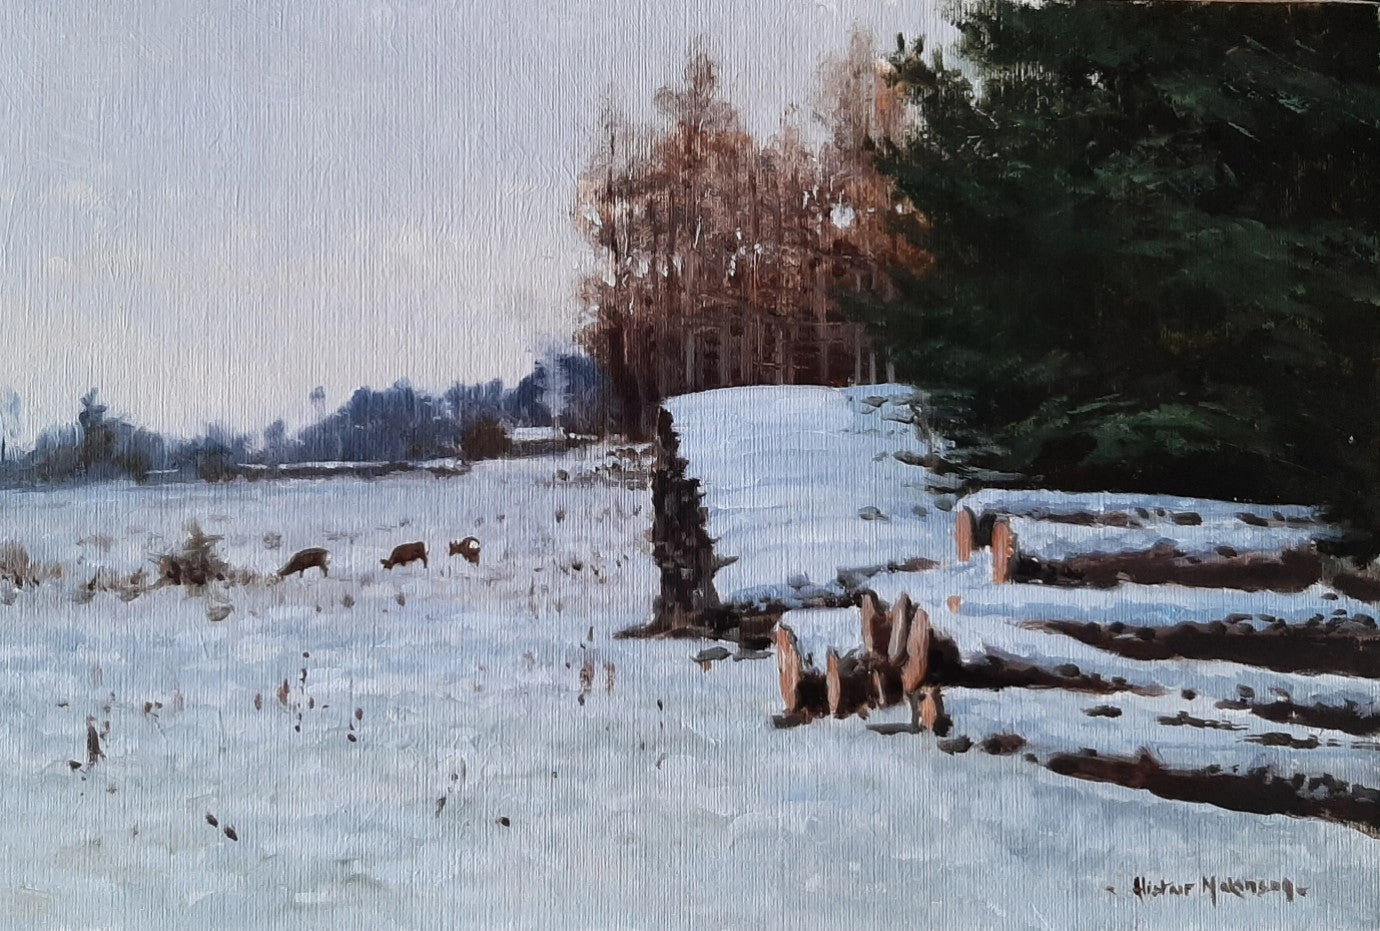 'Winter Roe' - Original Oil Painting by Alistair Makinson - 27 x 18cm